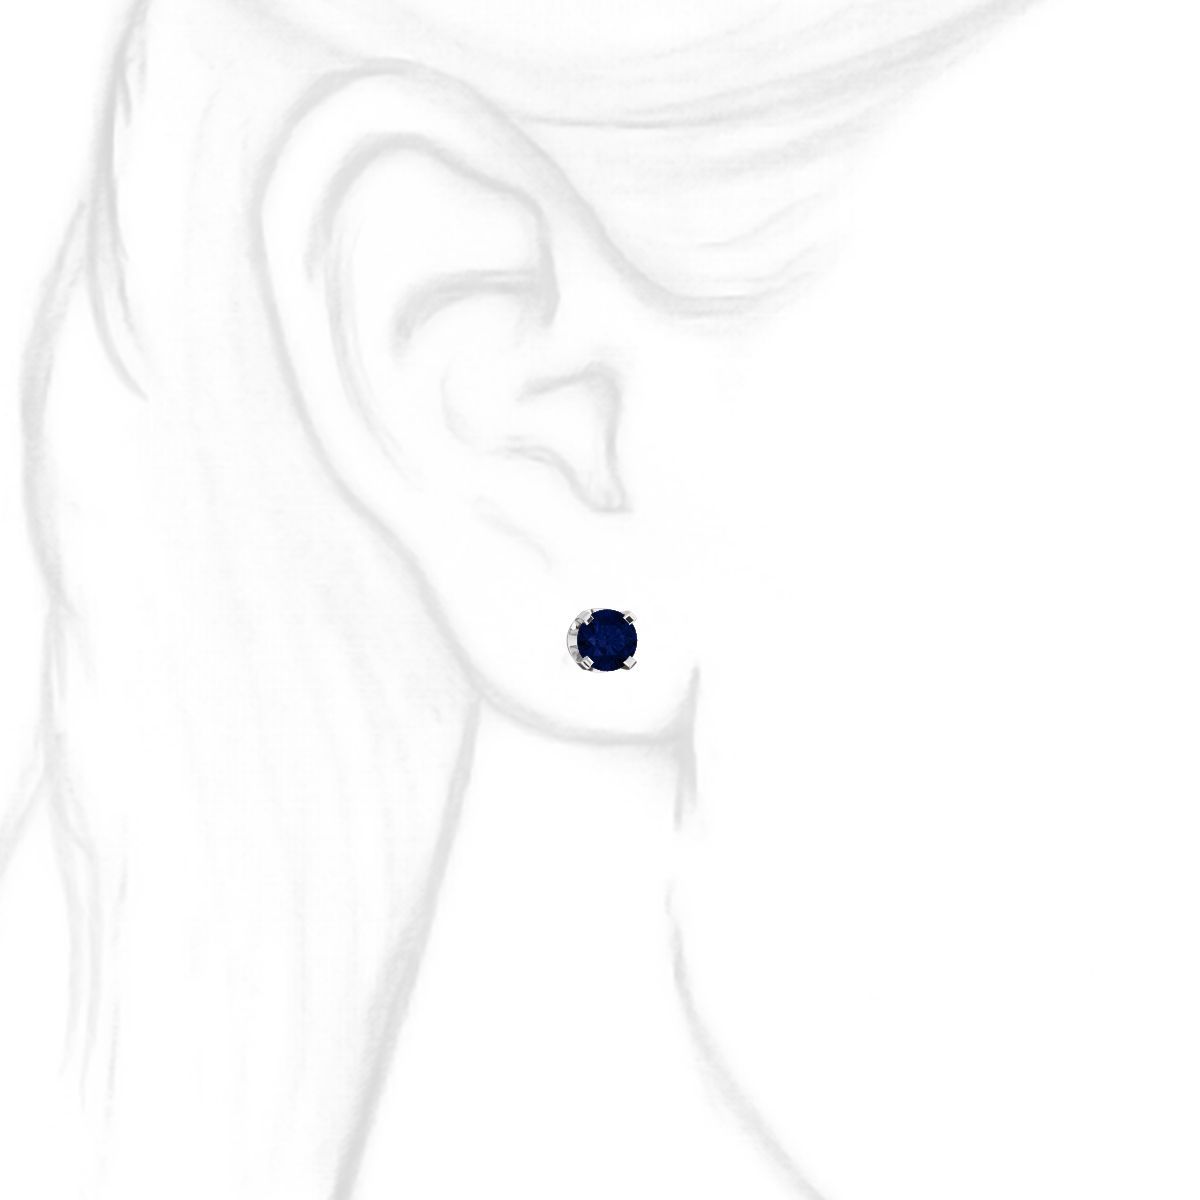 5mm, 1.0cts Trustmark Created Sapphire 4-Prong Screw Back Stud Earrings 14K White Gold